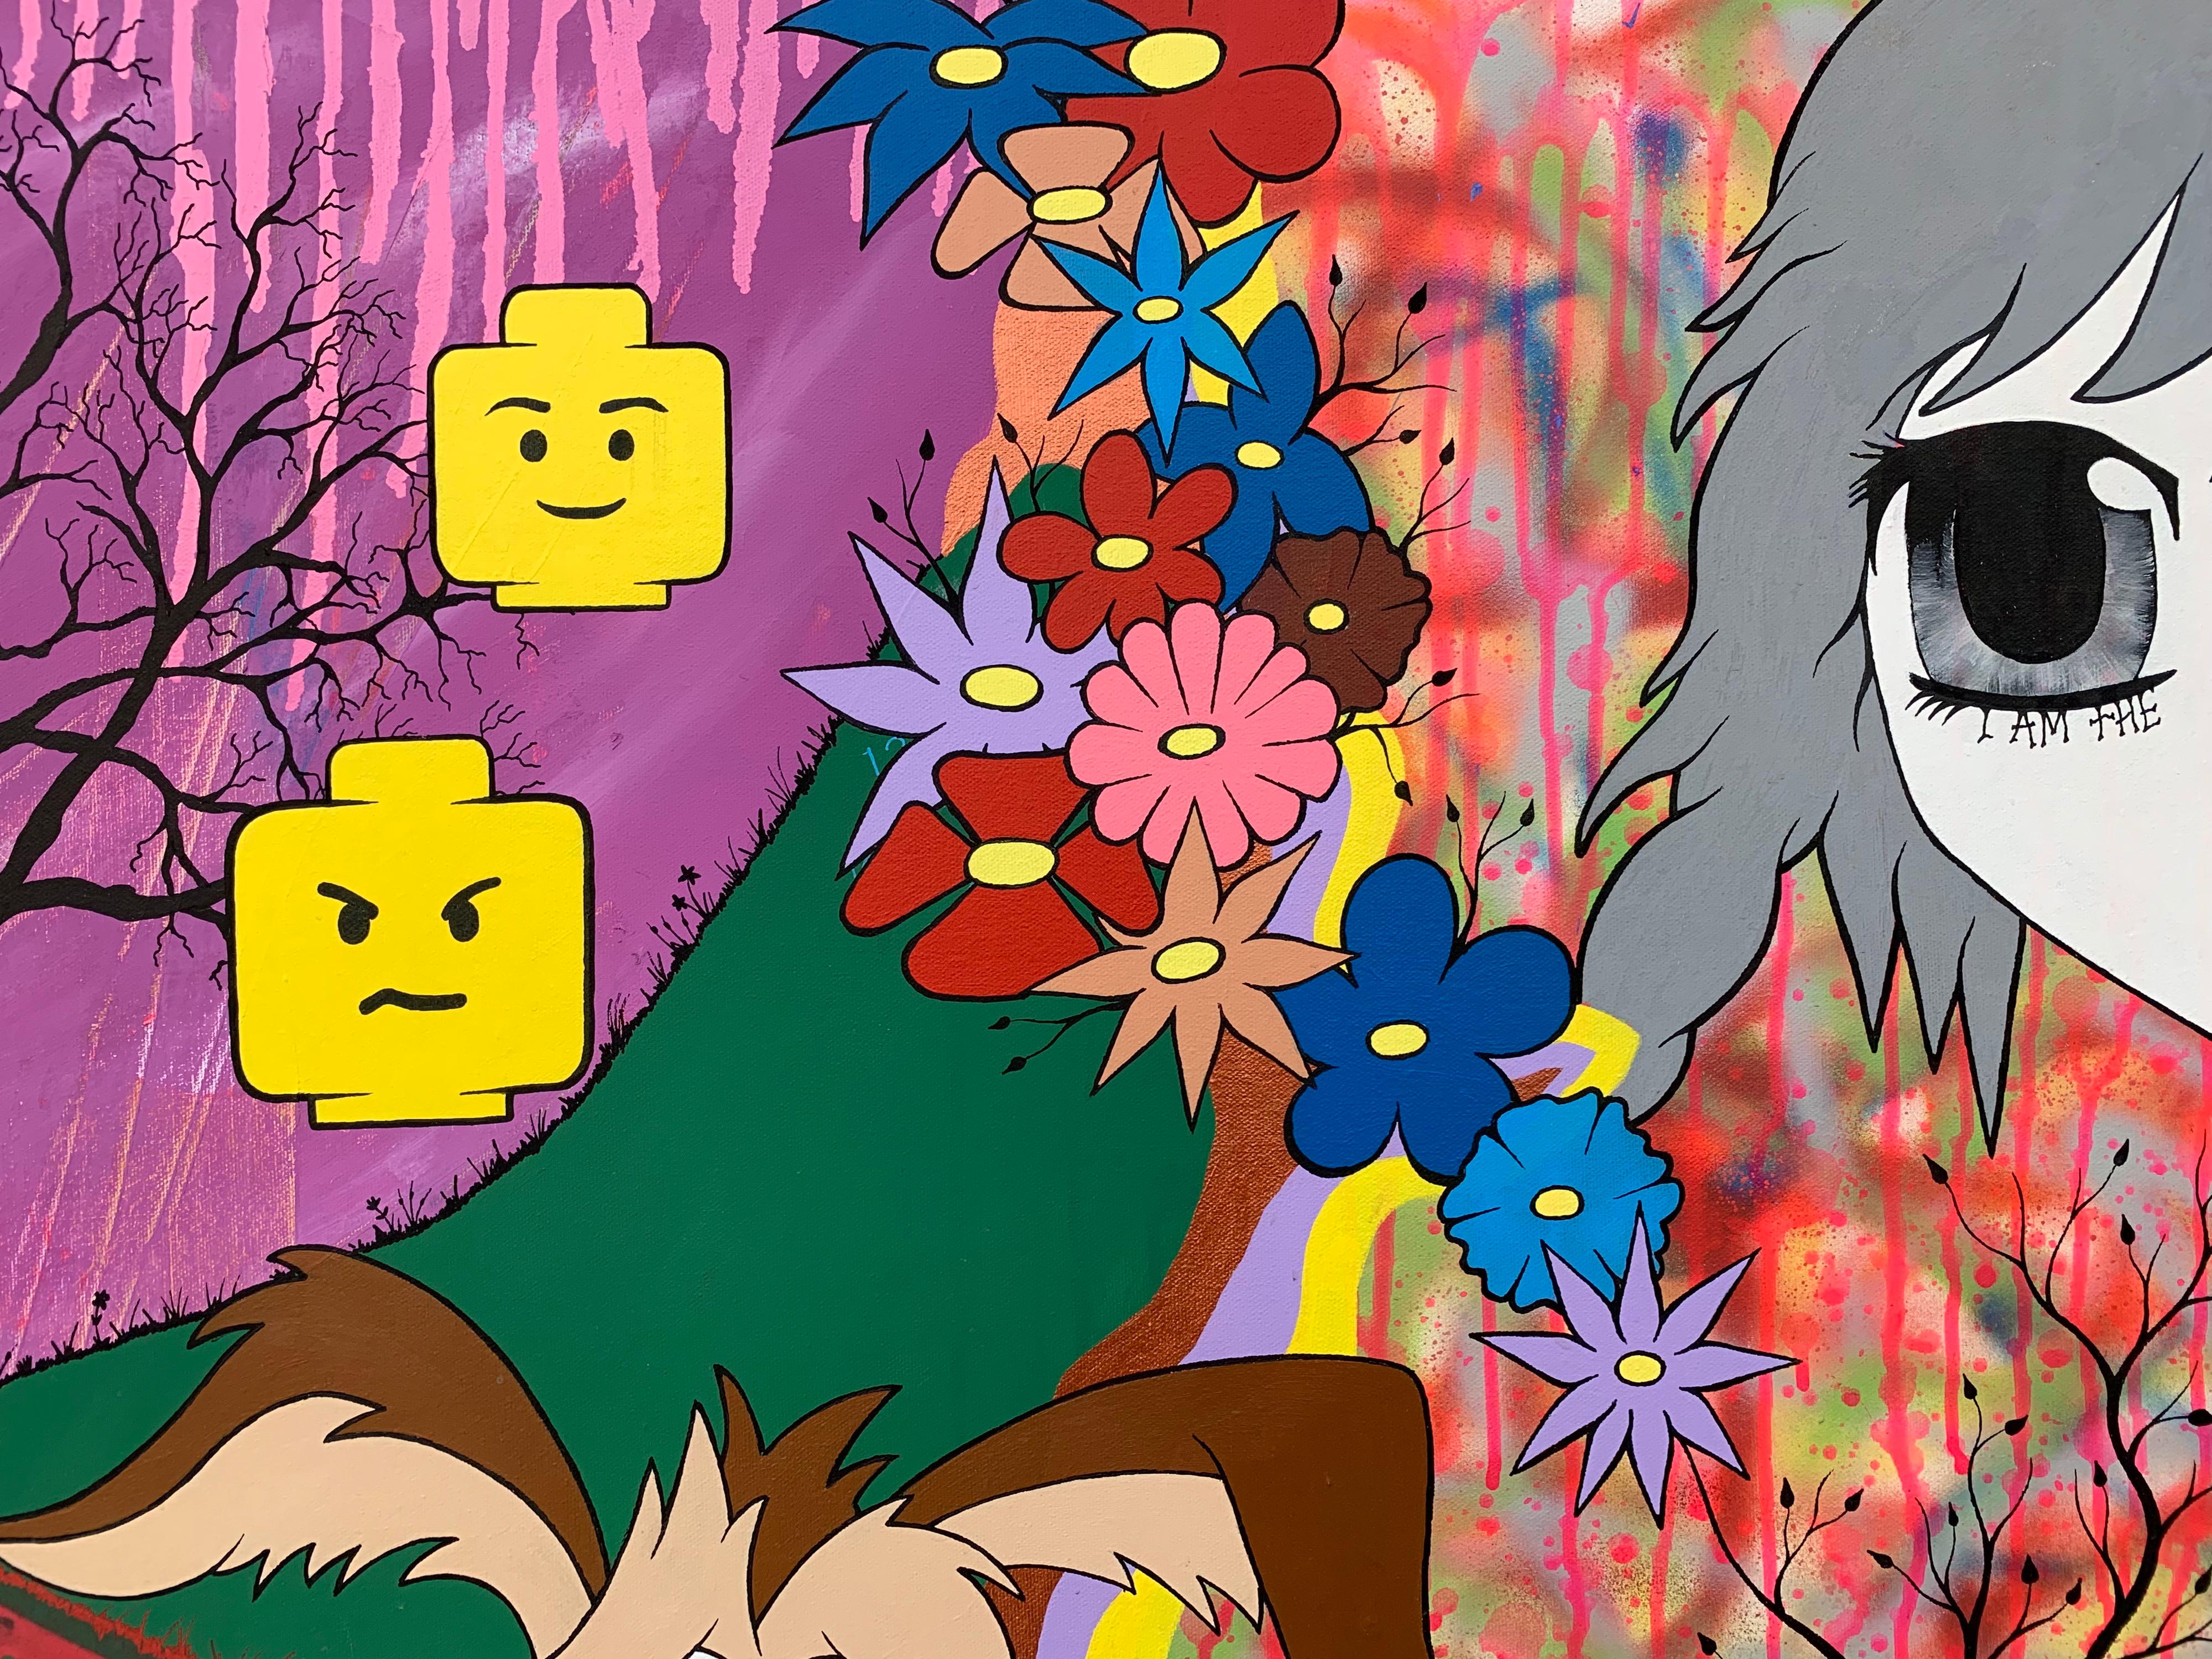 McFuture Colourful Manga Cartoon Pop Art by Young British Urban Graffiti Artist 5